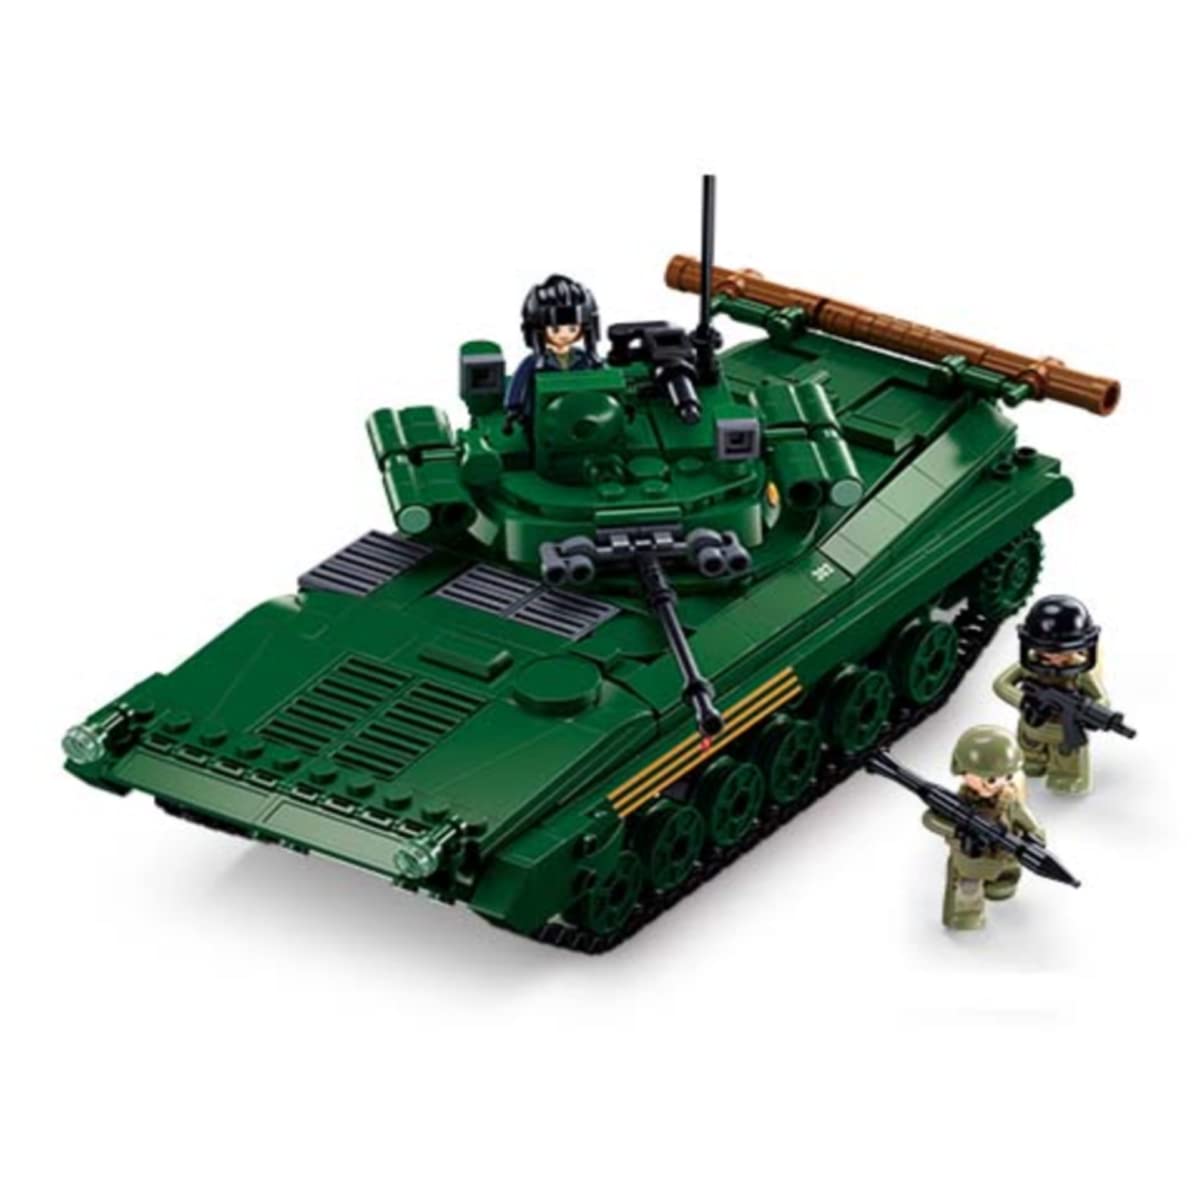 DAHONPA BMP-1 步兵战车陆军积木（738 件），二战军事历史收藏模型，带 2 个士兵人物，儿童和成人玩具礼物。 